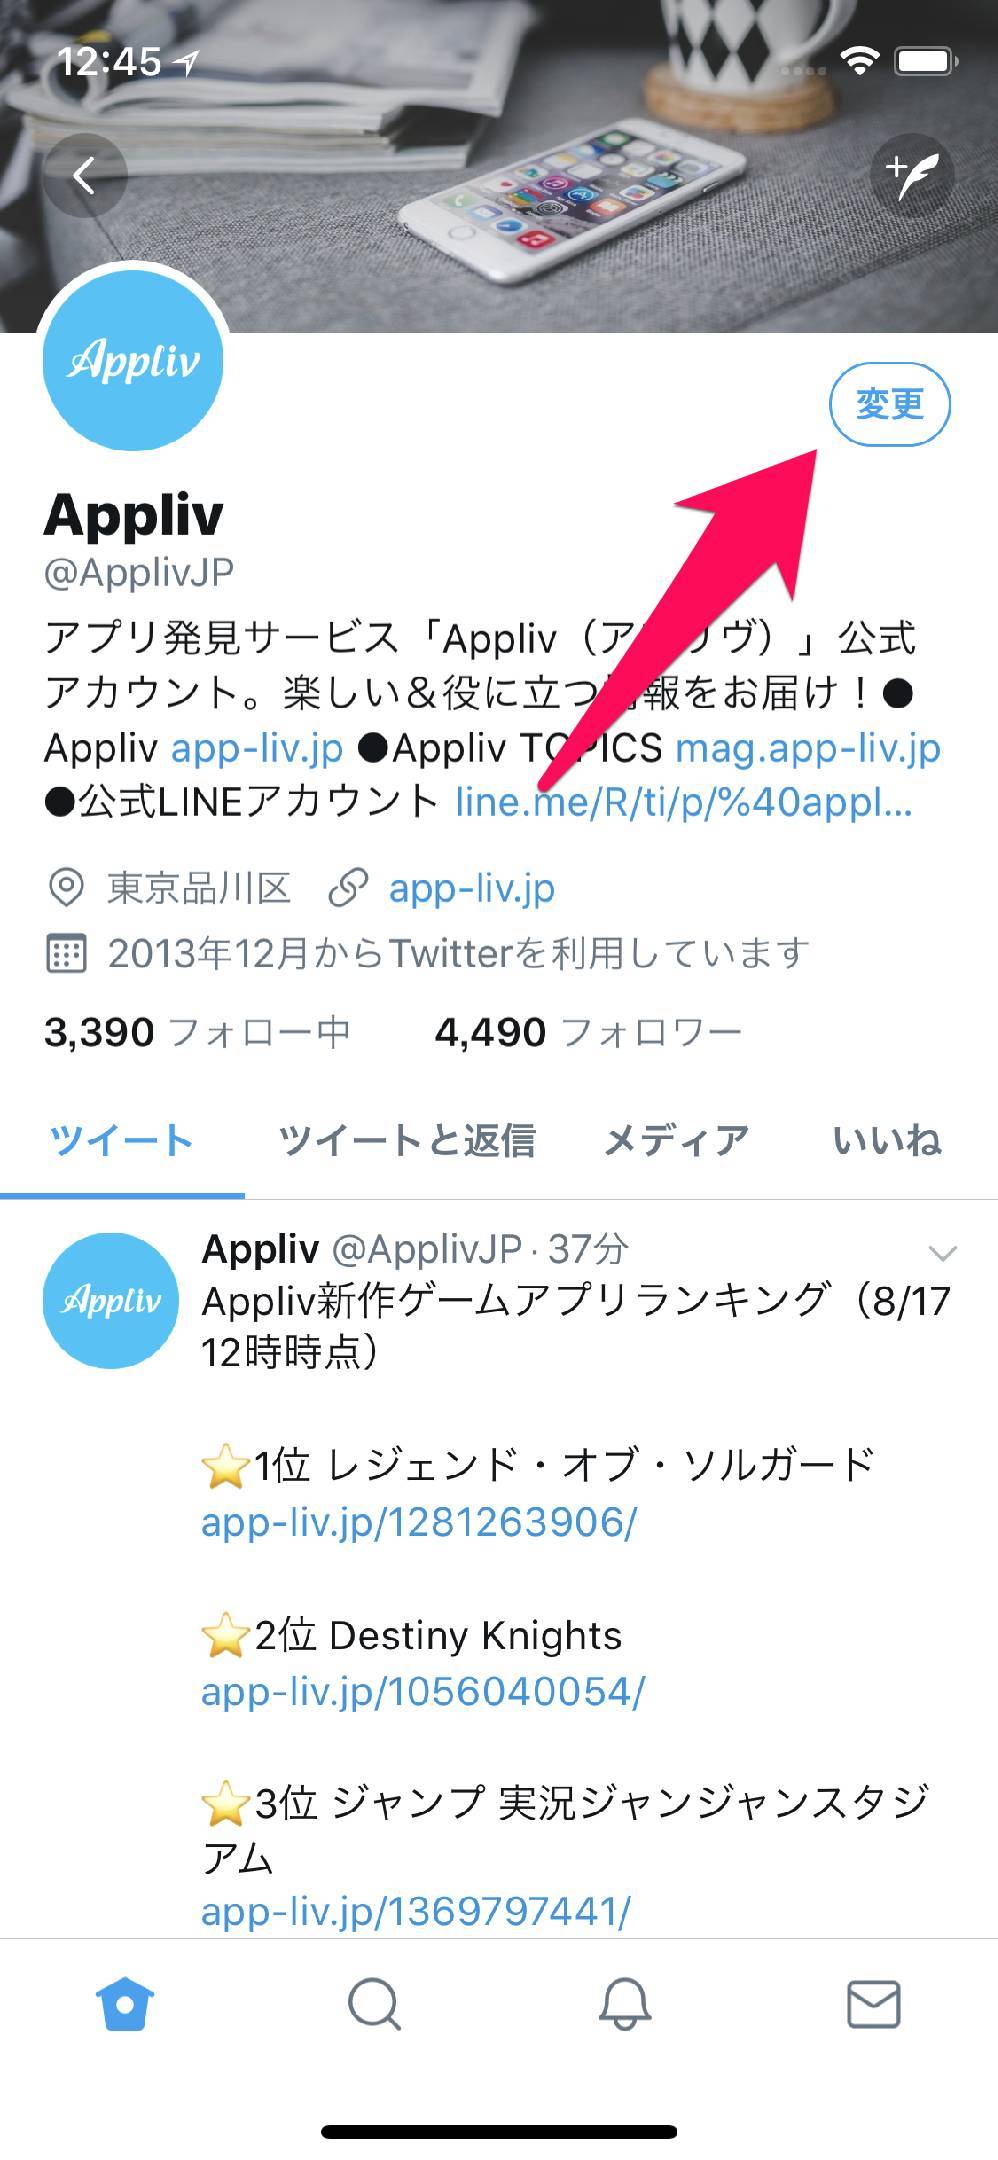 Twitter プロフィールの変更方法 初心者ガイド Iphone Android Pc Appliv Topics